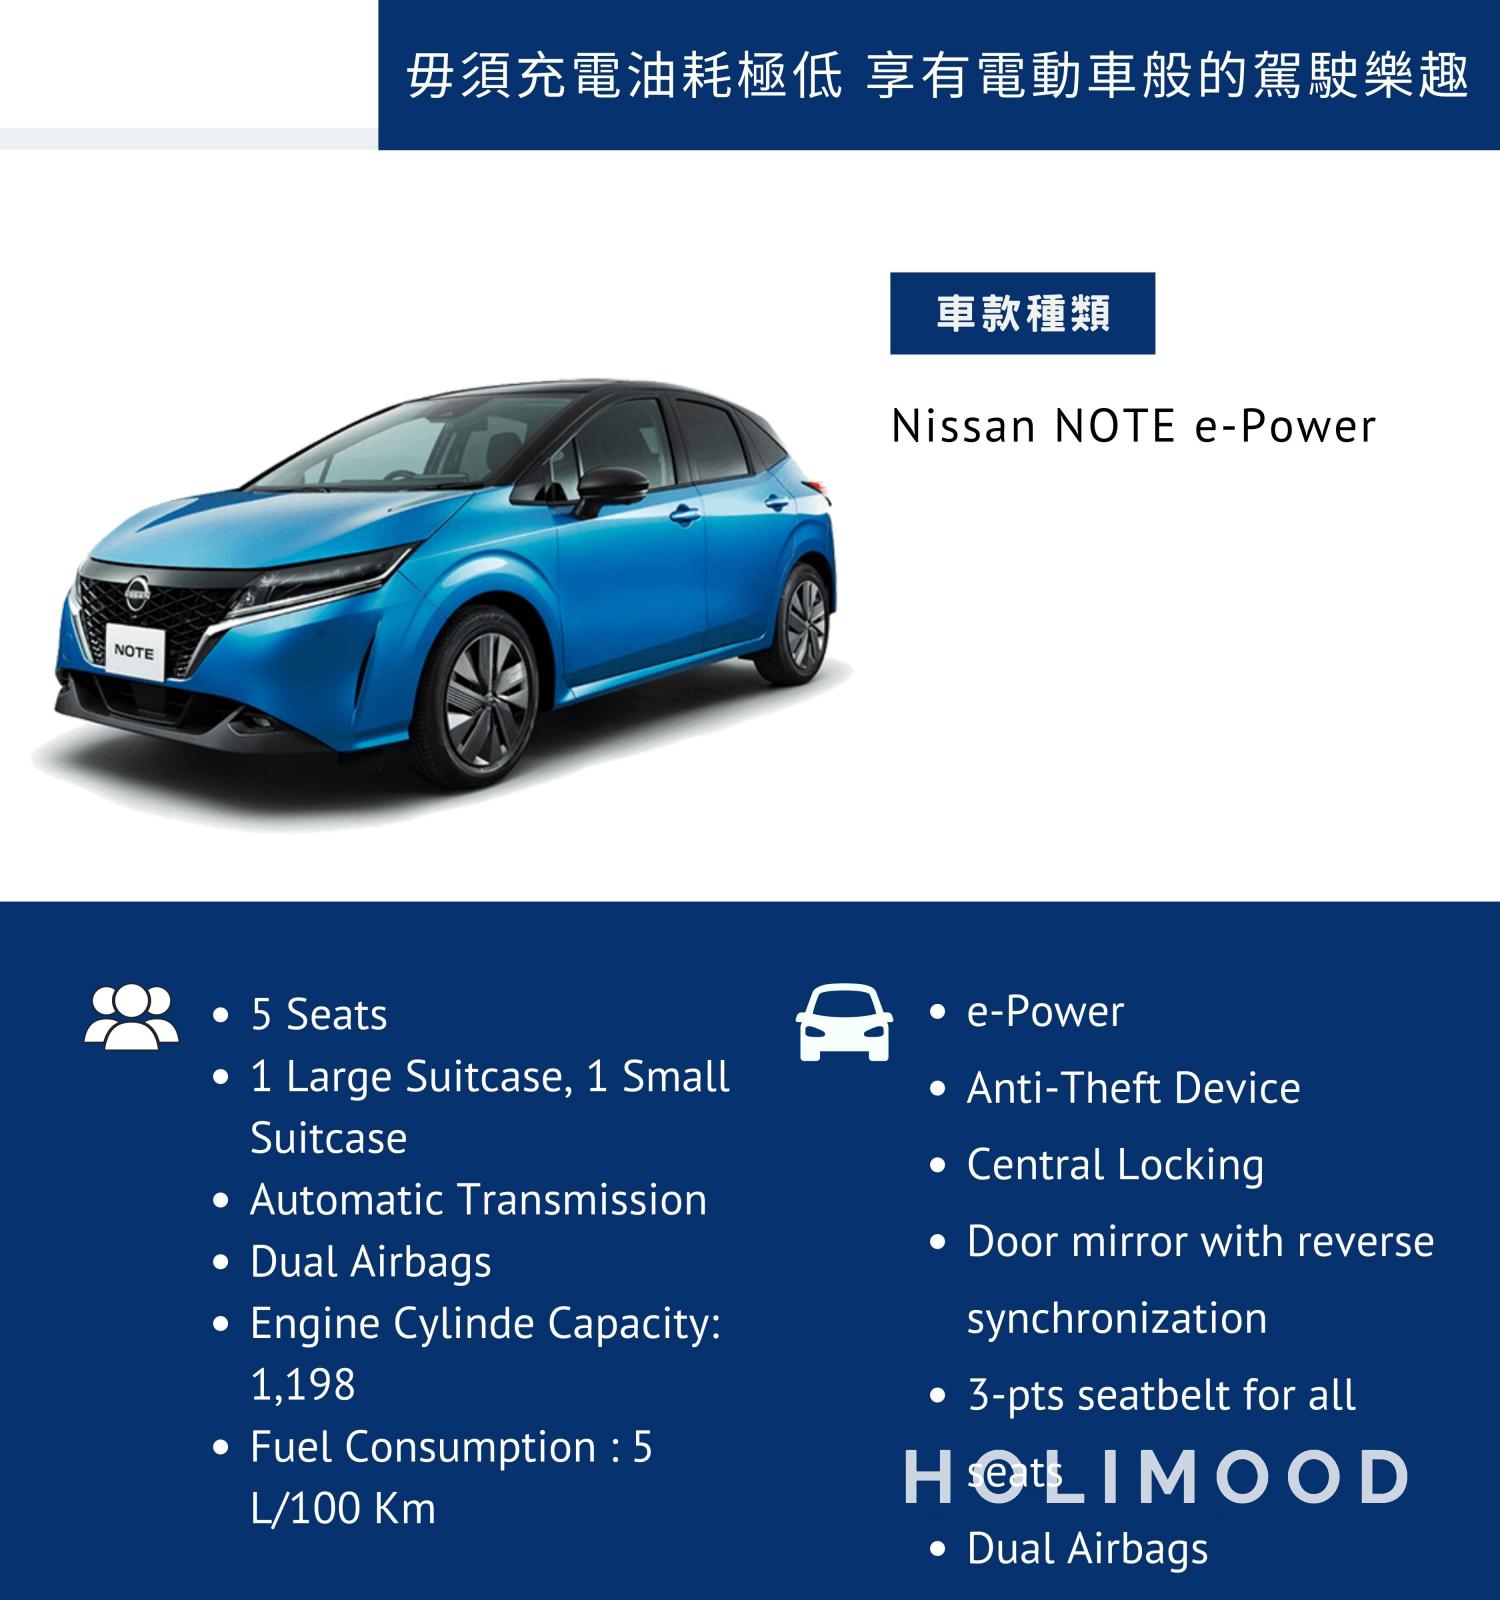 DCH Mobility Car Rent x Holimood Promotion 【毋須充電極低油耗】【五年內新車】Nissan NOTE e-Power - 高效能5人車 (月租) 2